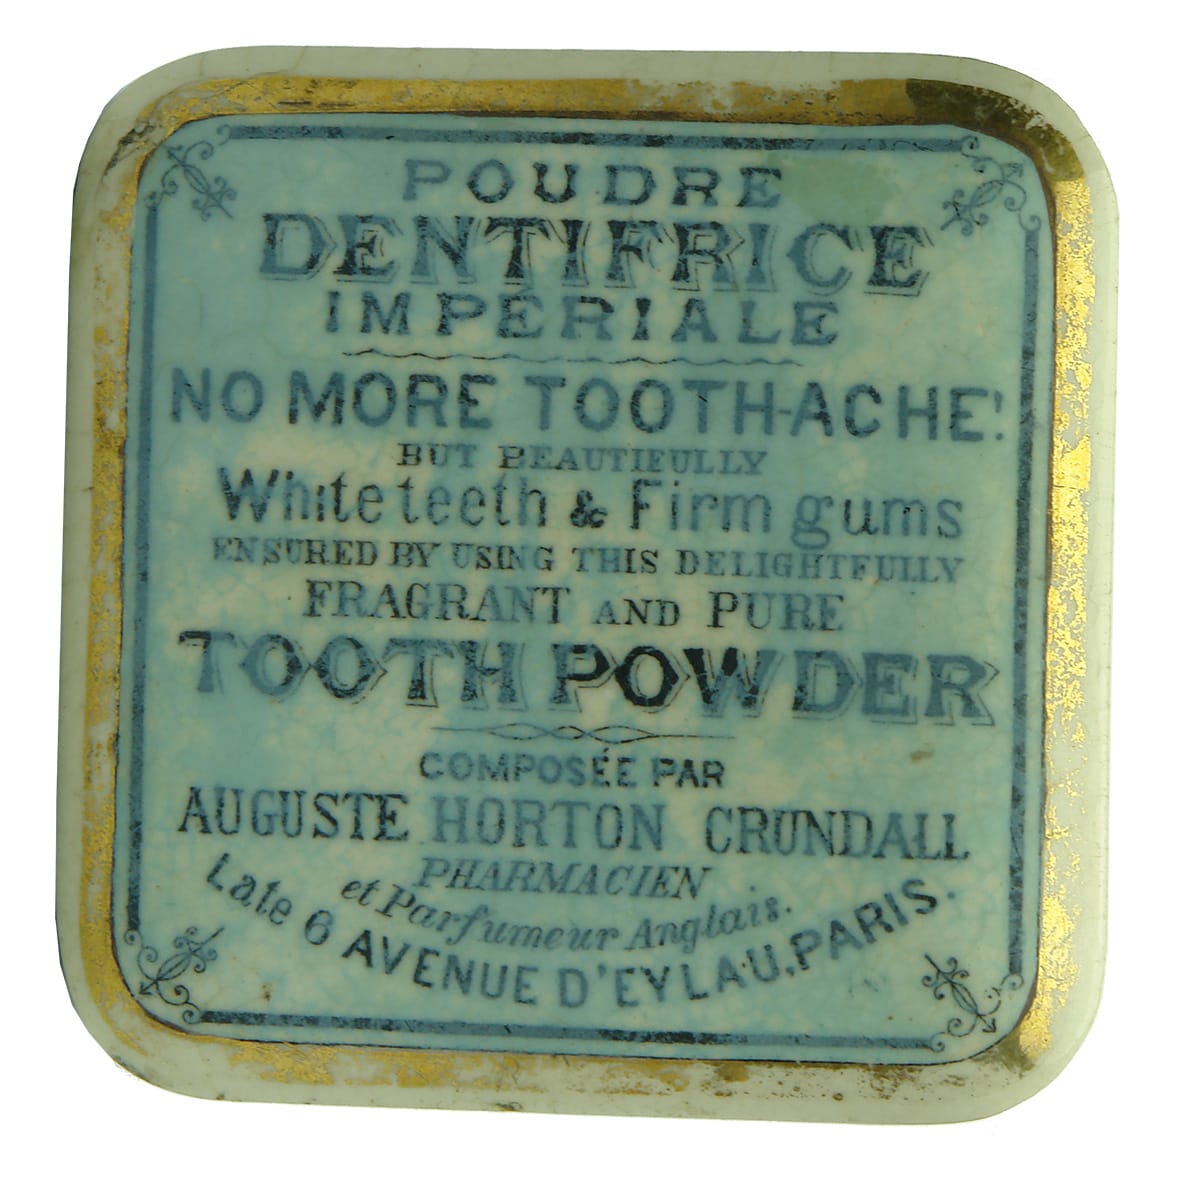 Horton Crundall Tooth Powder Pot Lid